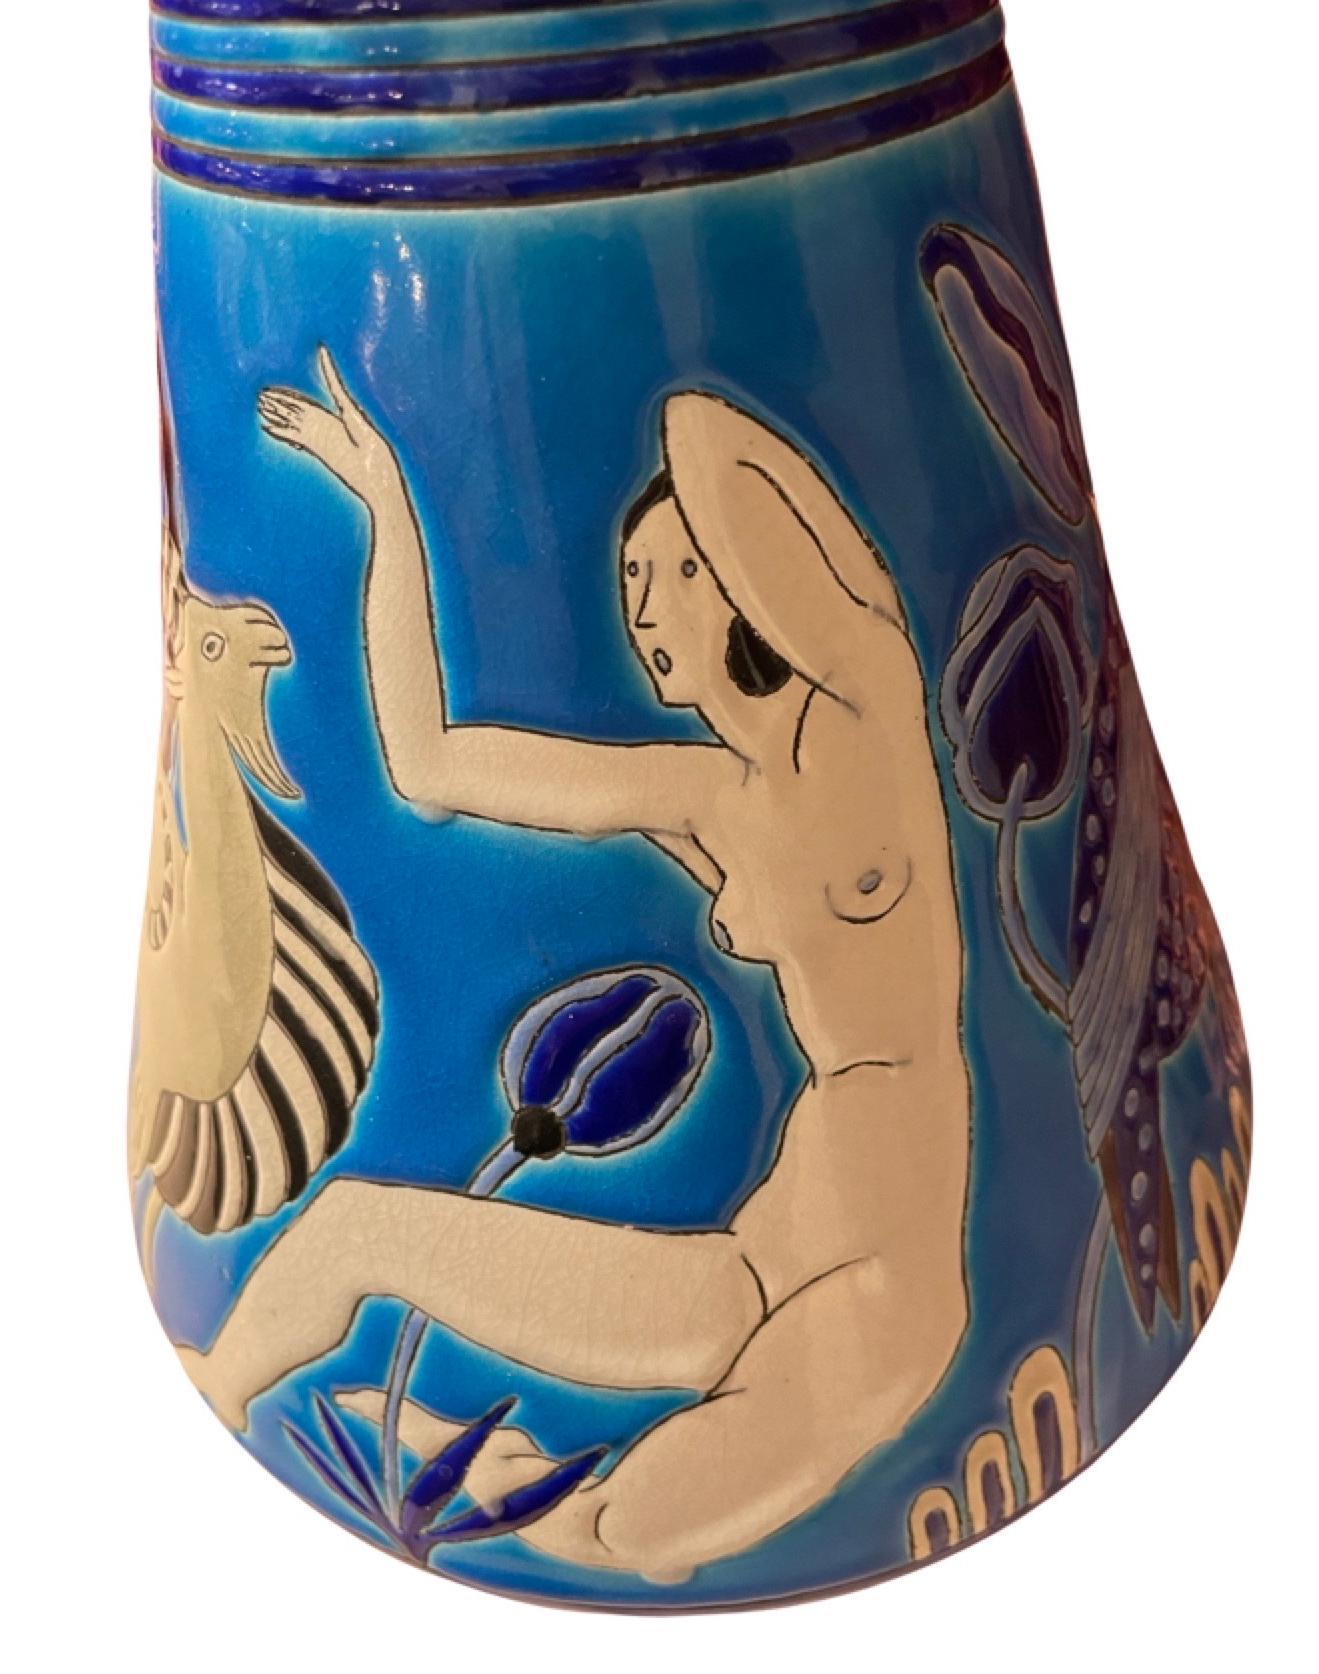 Cloissoné Art Deco Ceramic Vase with Bathing Nudes by Primavera  Longwy 1925 France